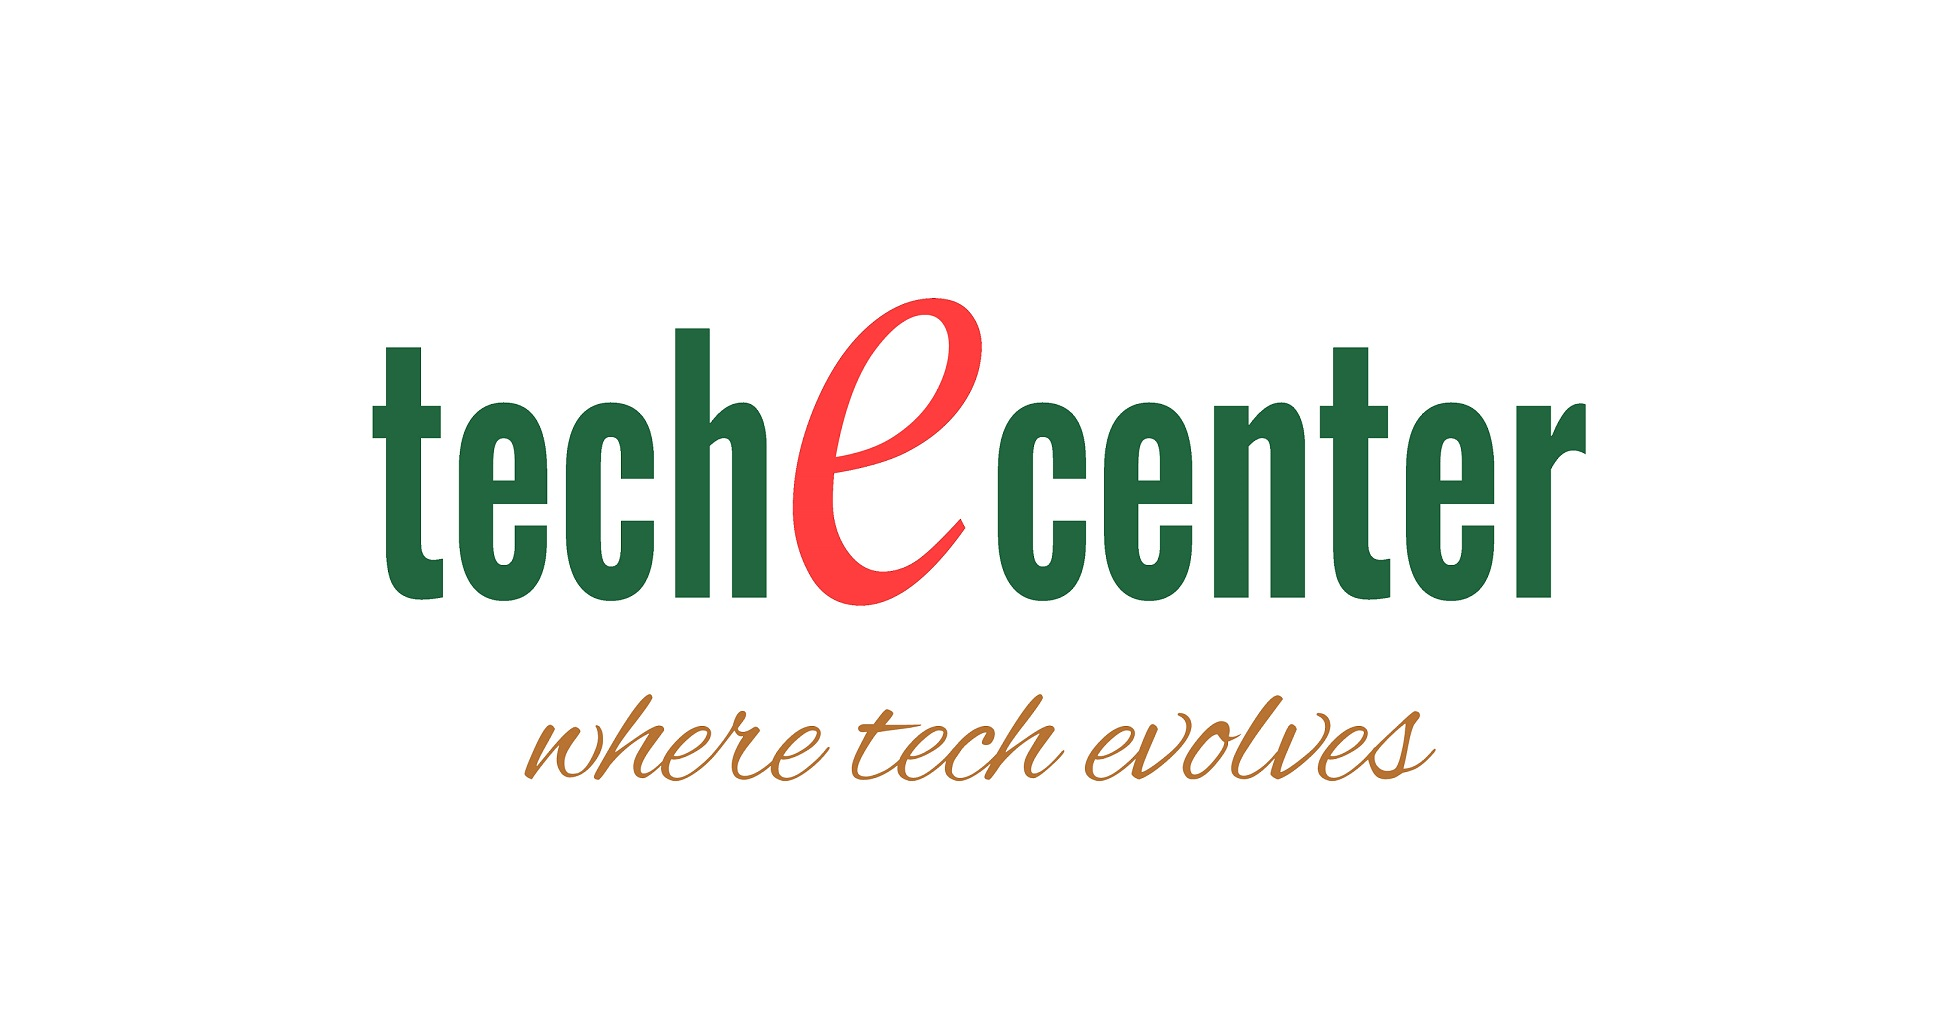 Teche Center